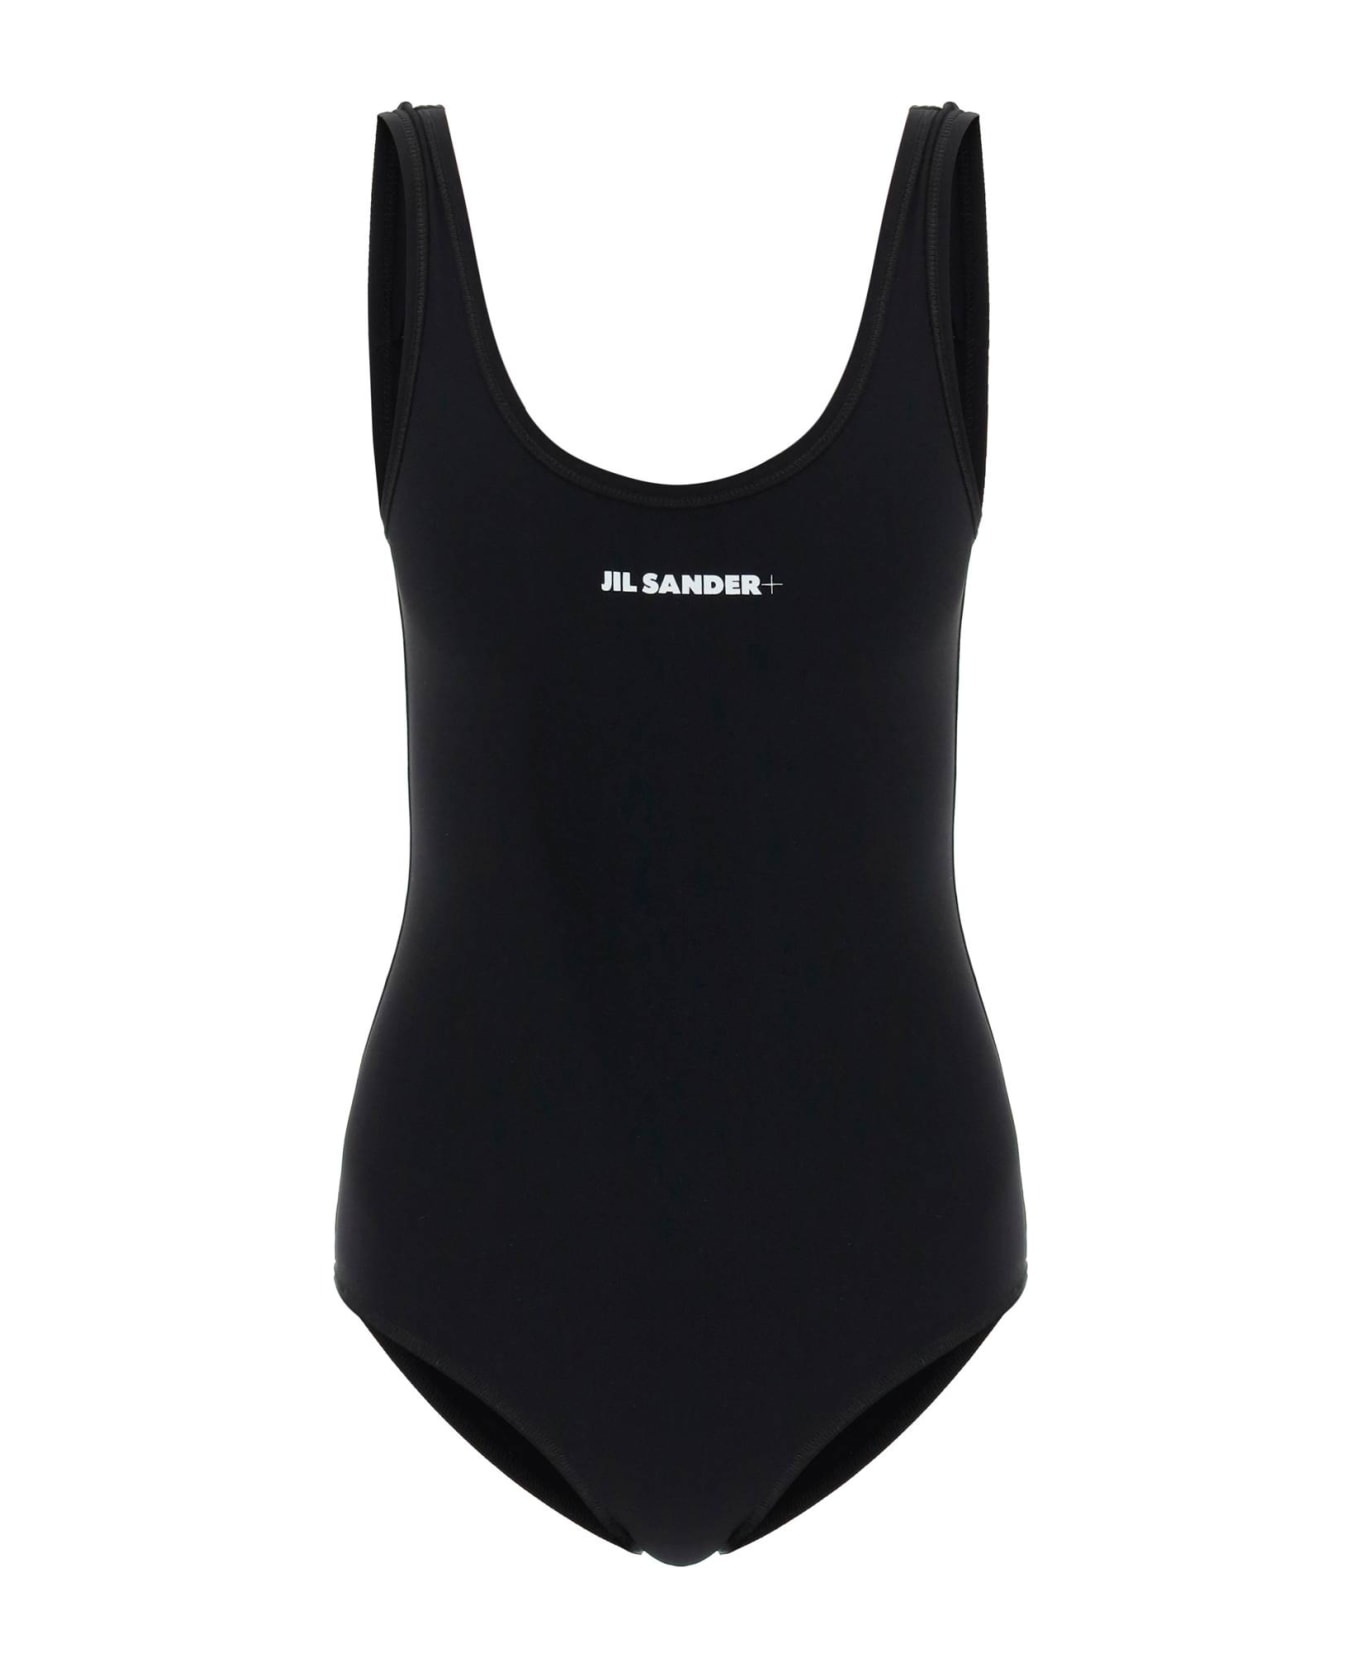 Jil Sander Black Swimsuit In Polyamide Blend - 001 水着